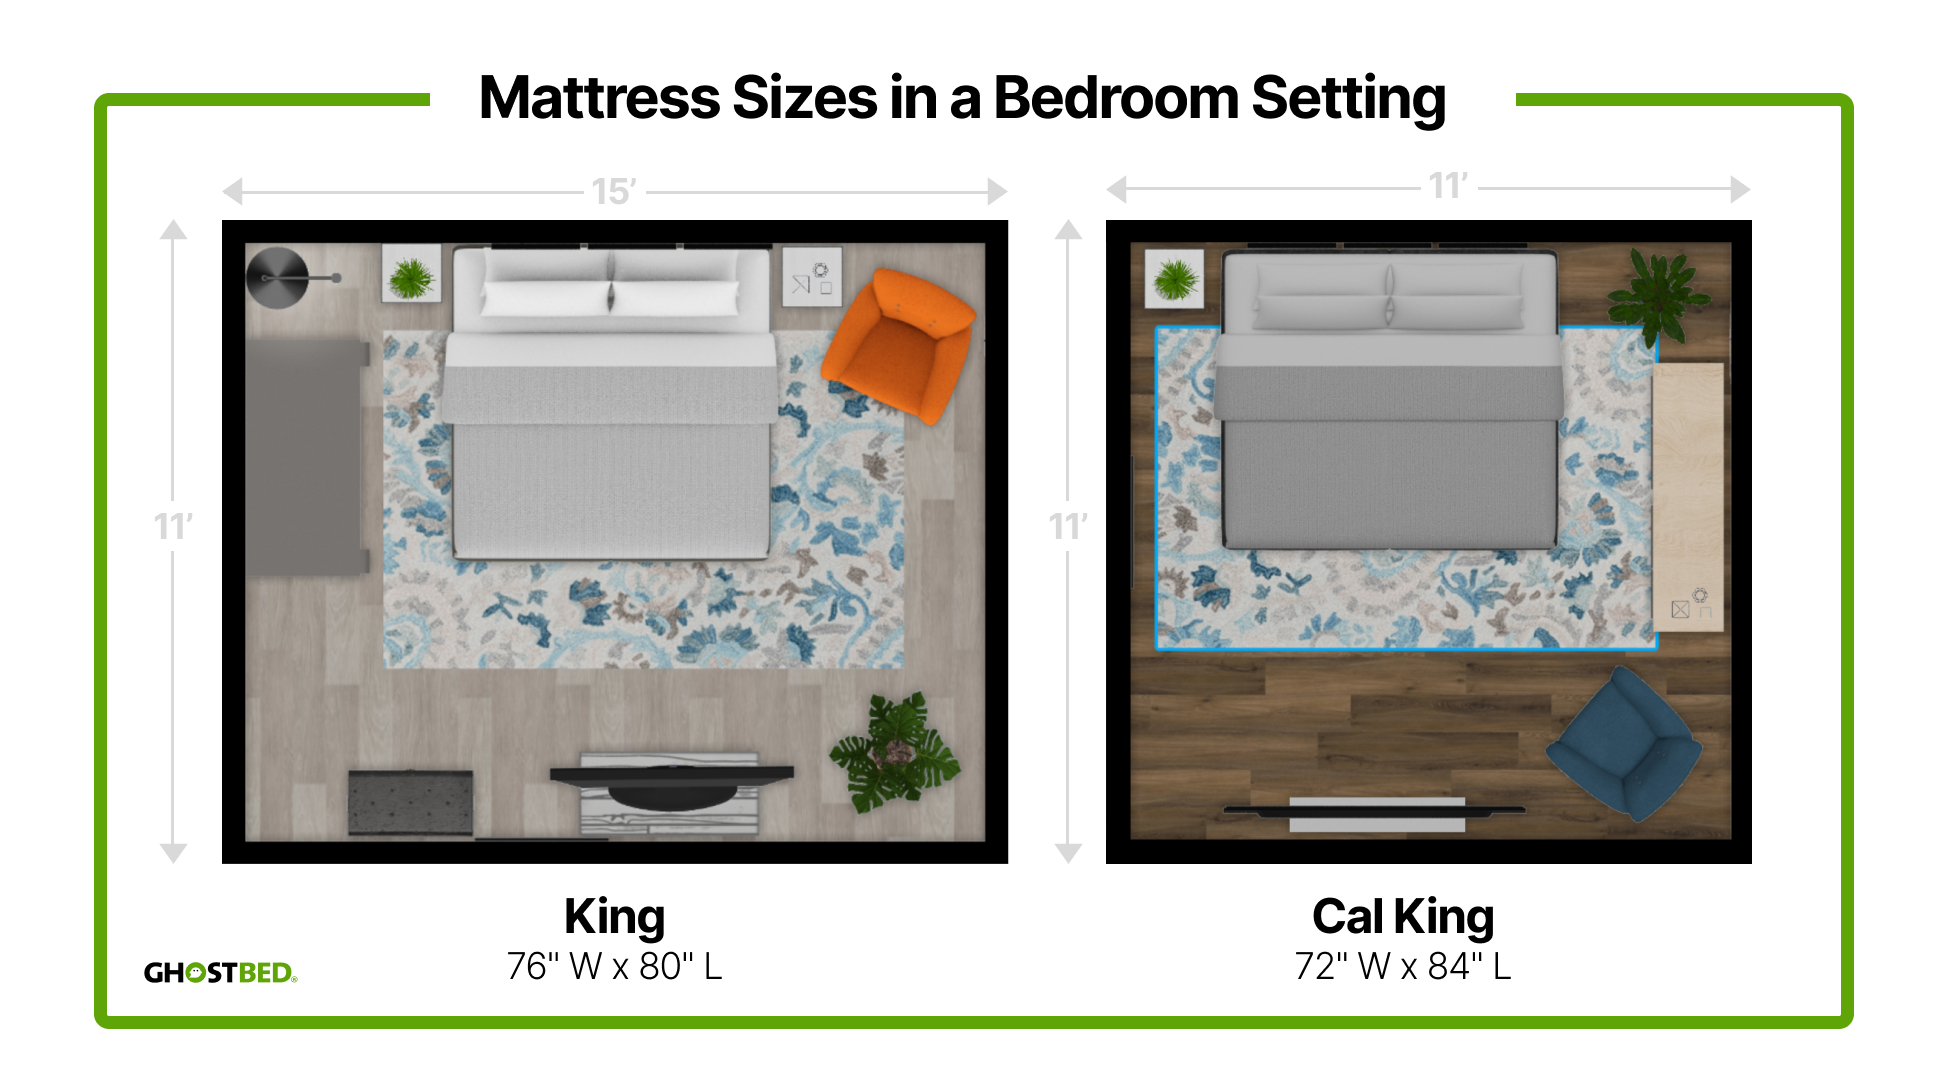 king mattress ans bigger